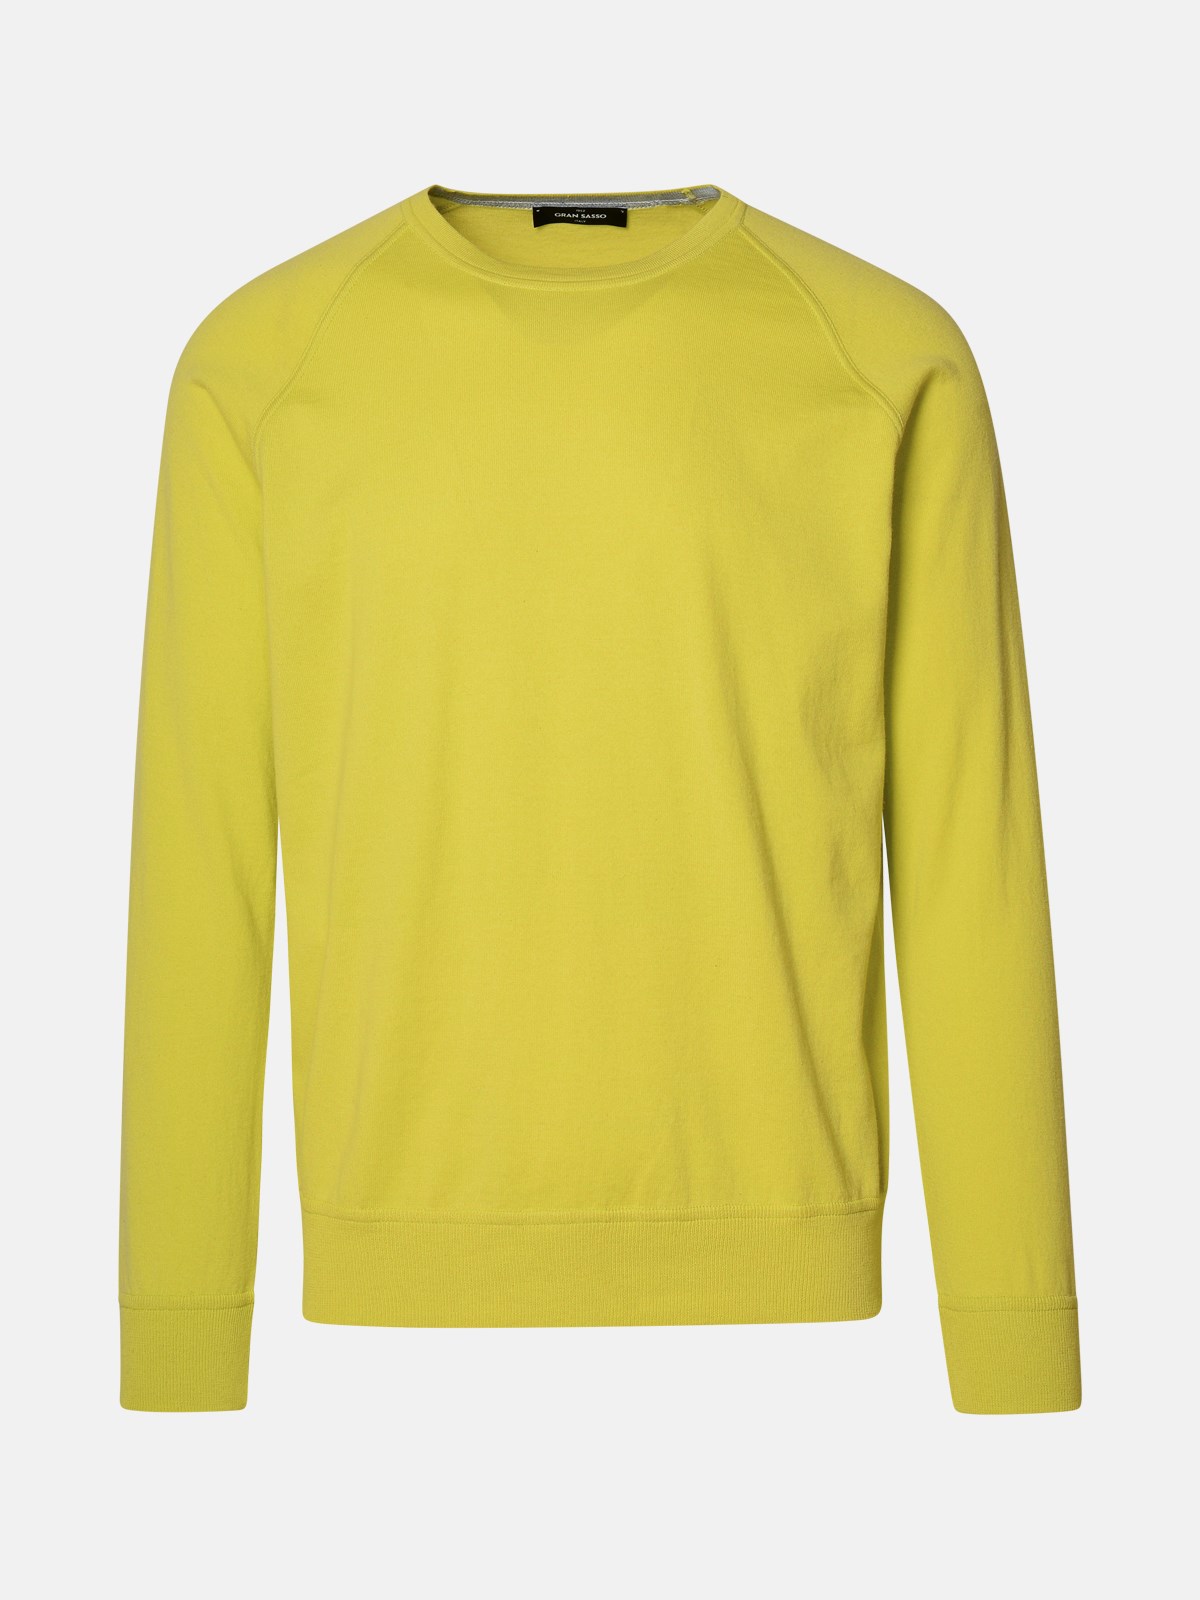 Shop Gran Sasso Yellow Cashmere Blend Sweater